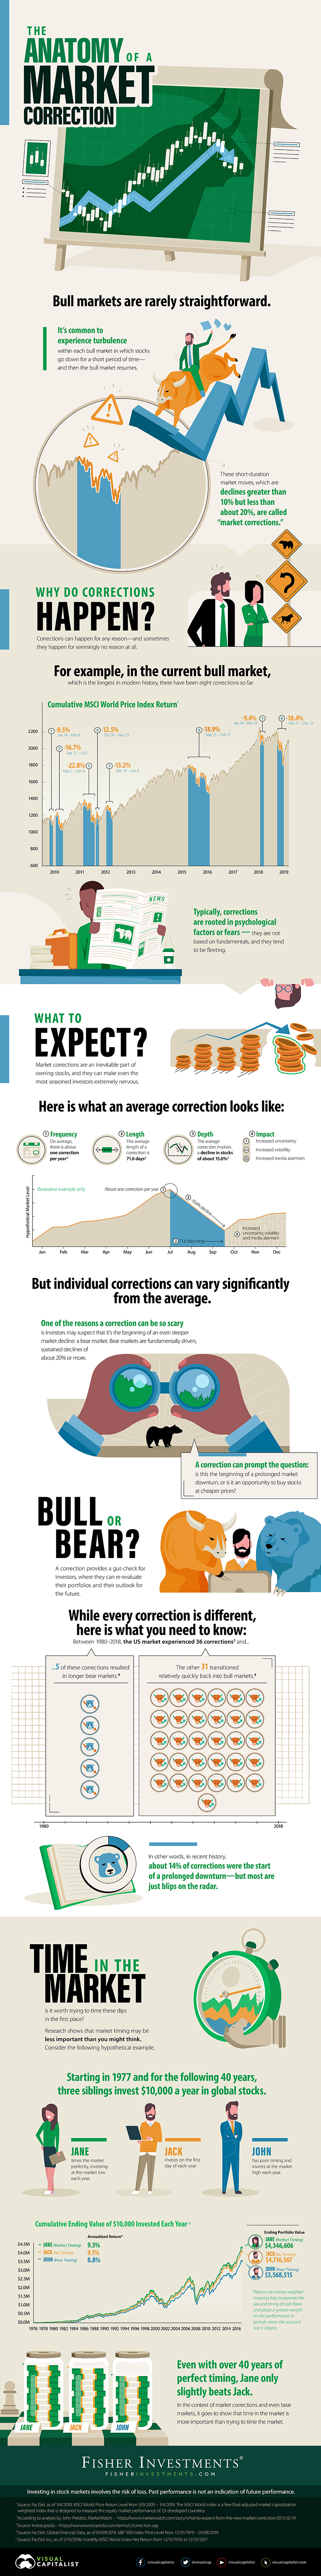 Market Corrections Infographic